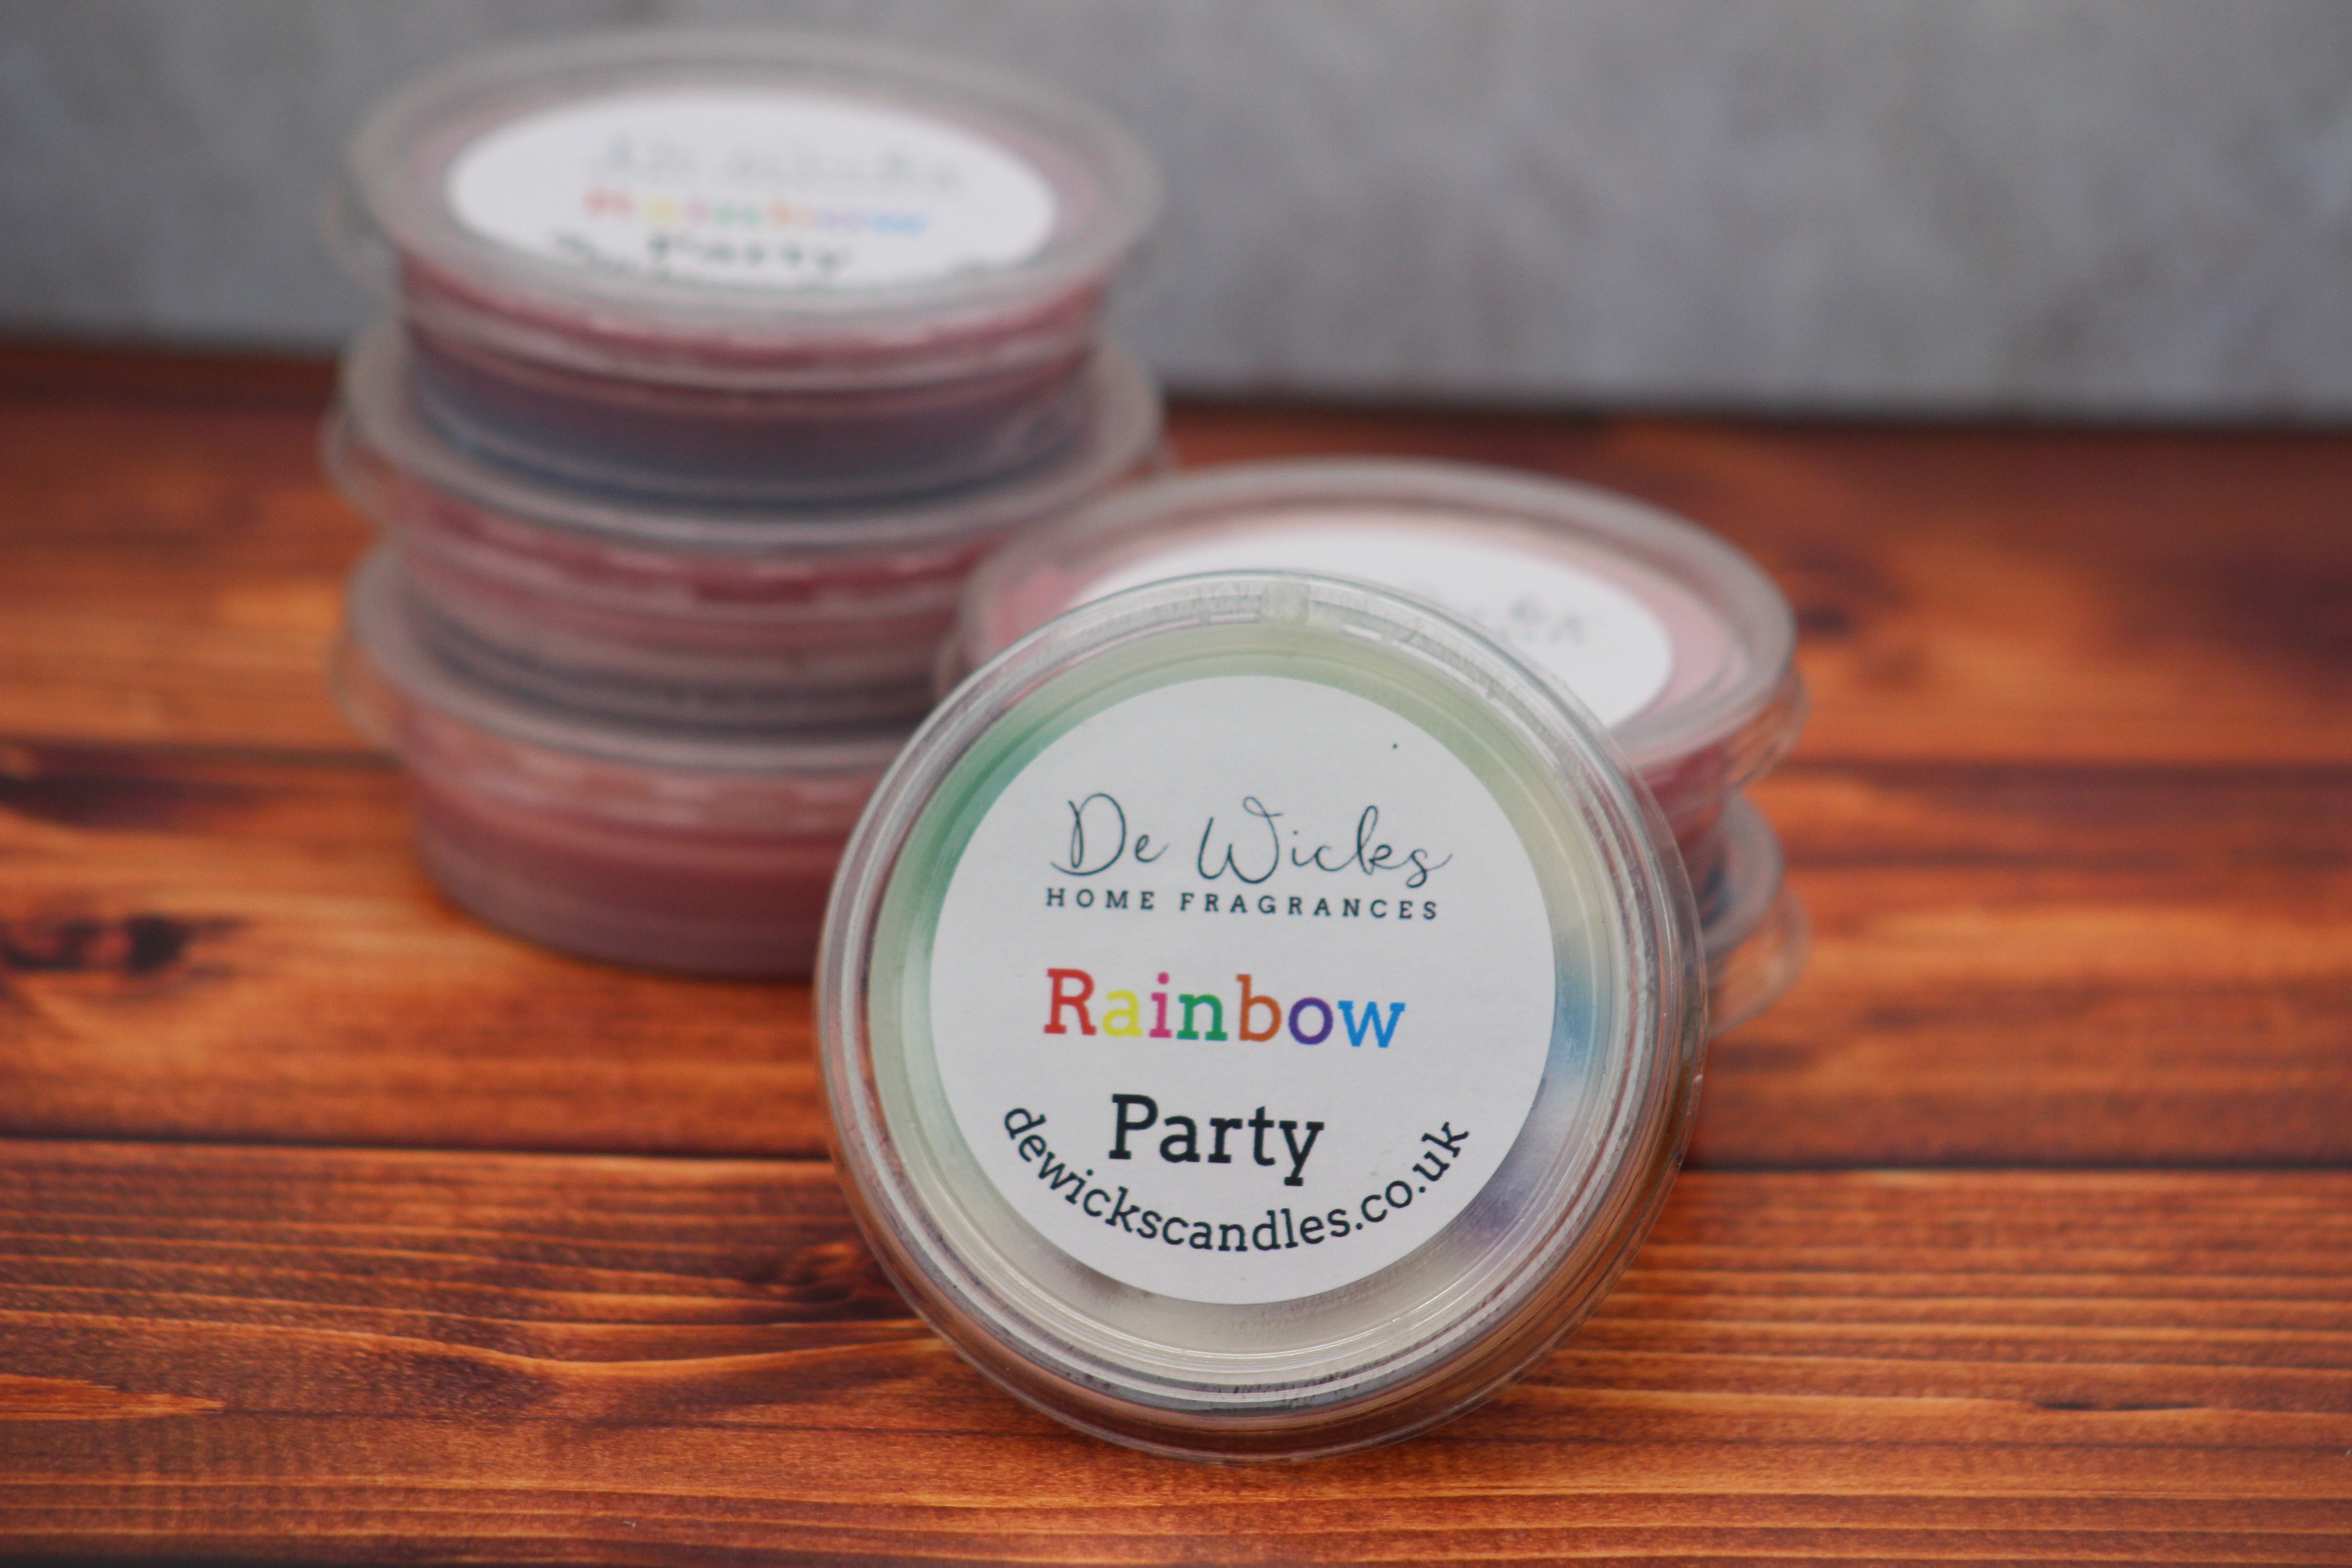 Rainbow Party - De Wicks Home Fragrances